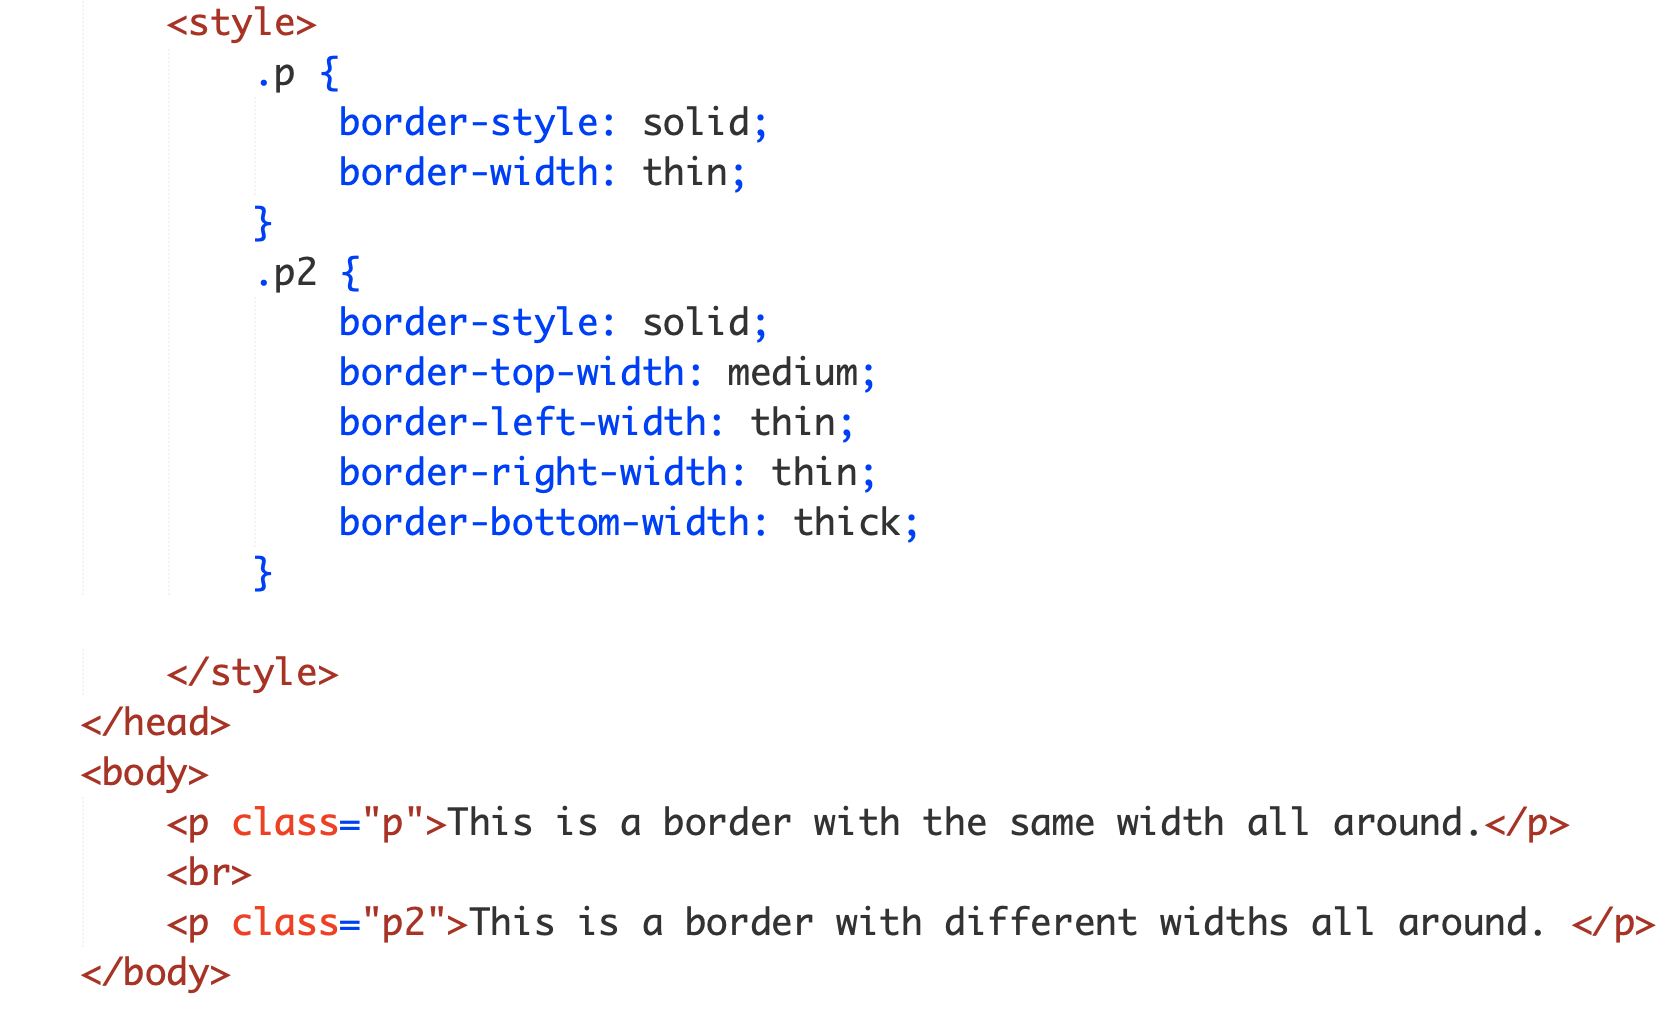 image of border width in code